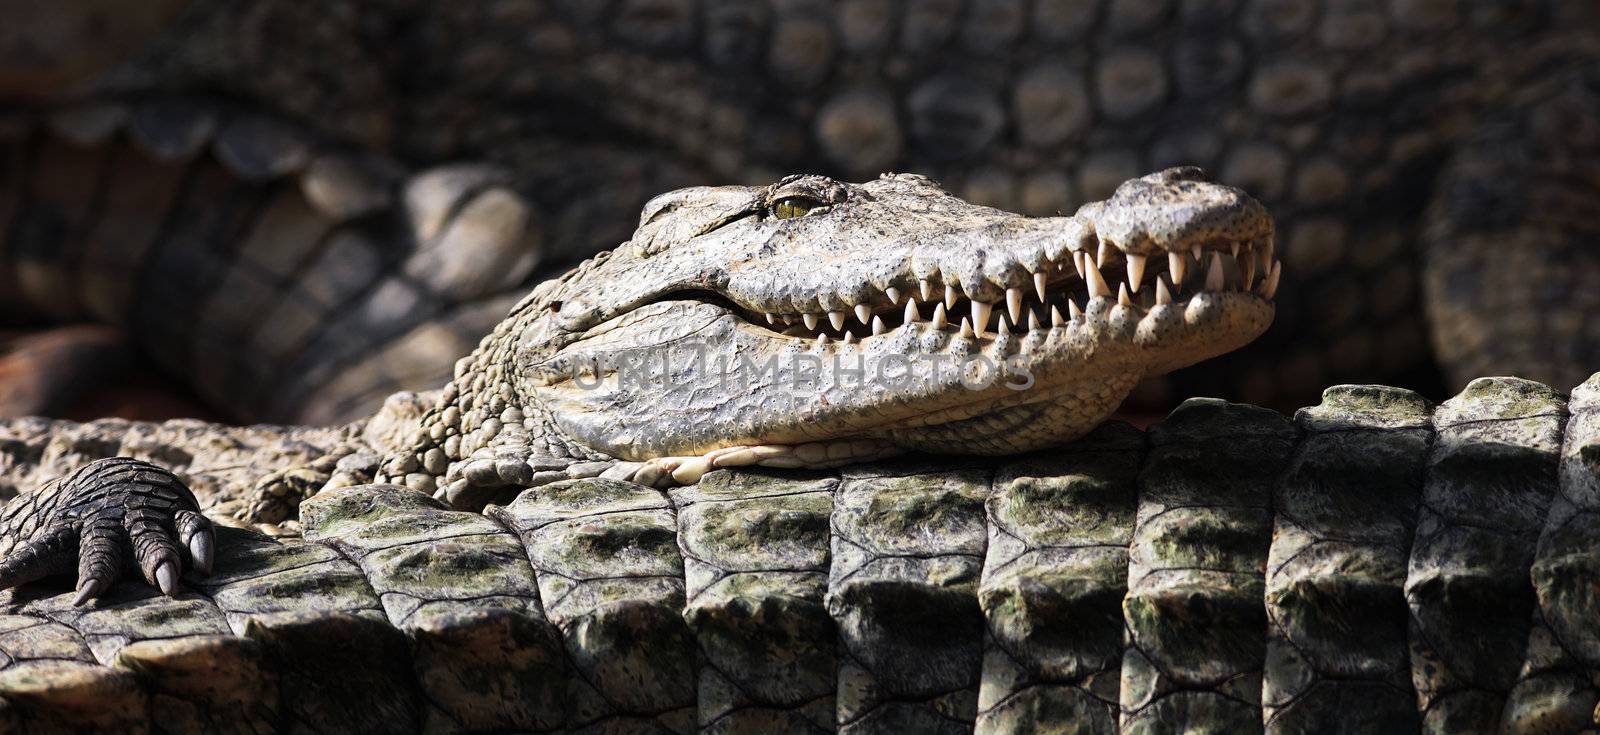 Crocodile sleeping with head above other crocodiles